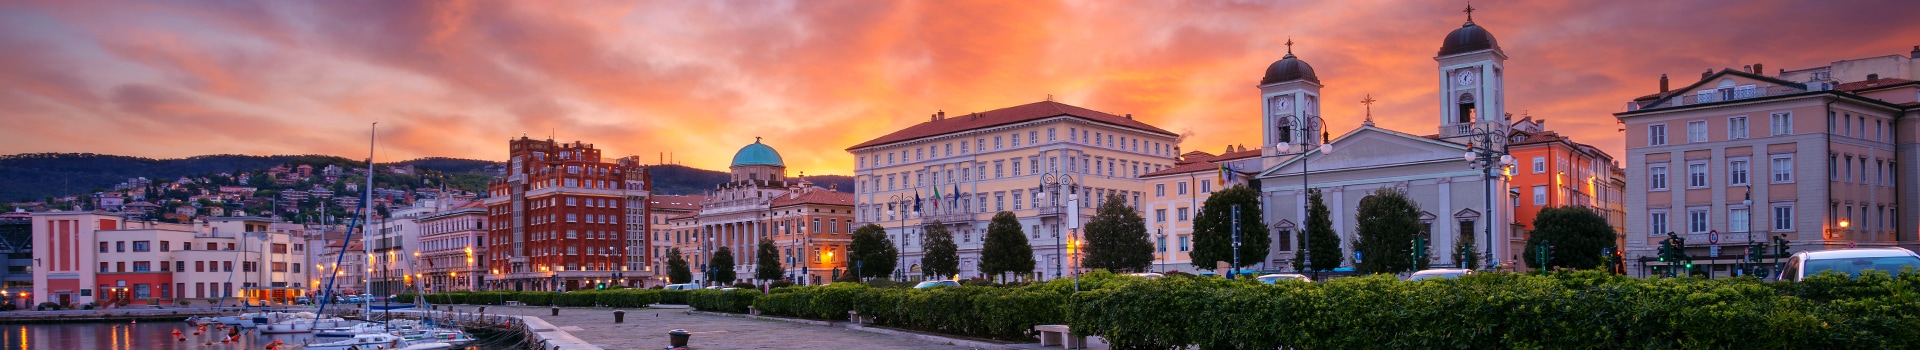 Pisa - Trieste